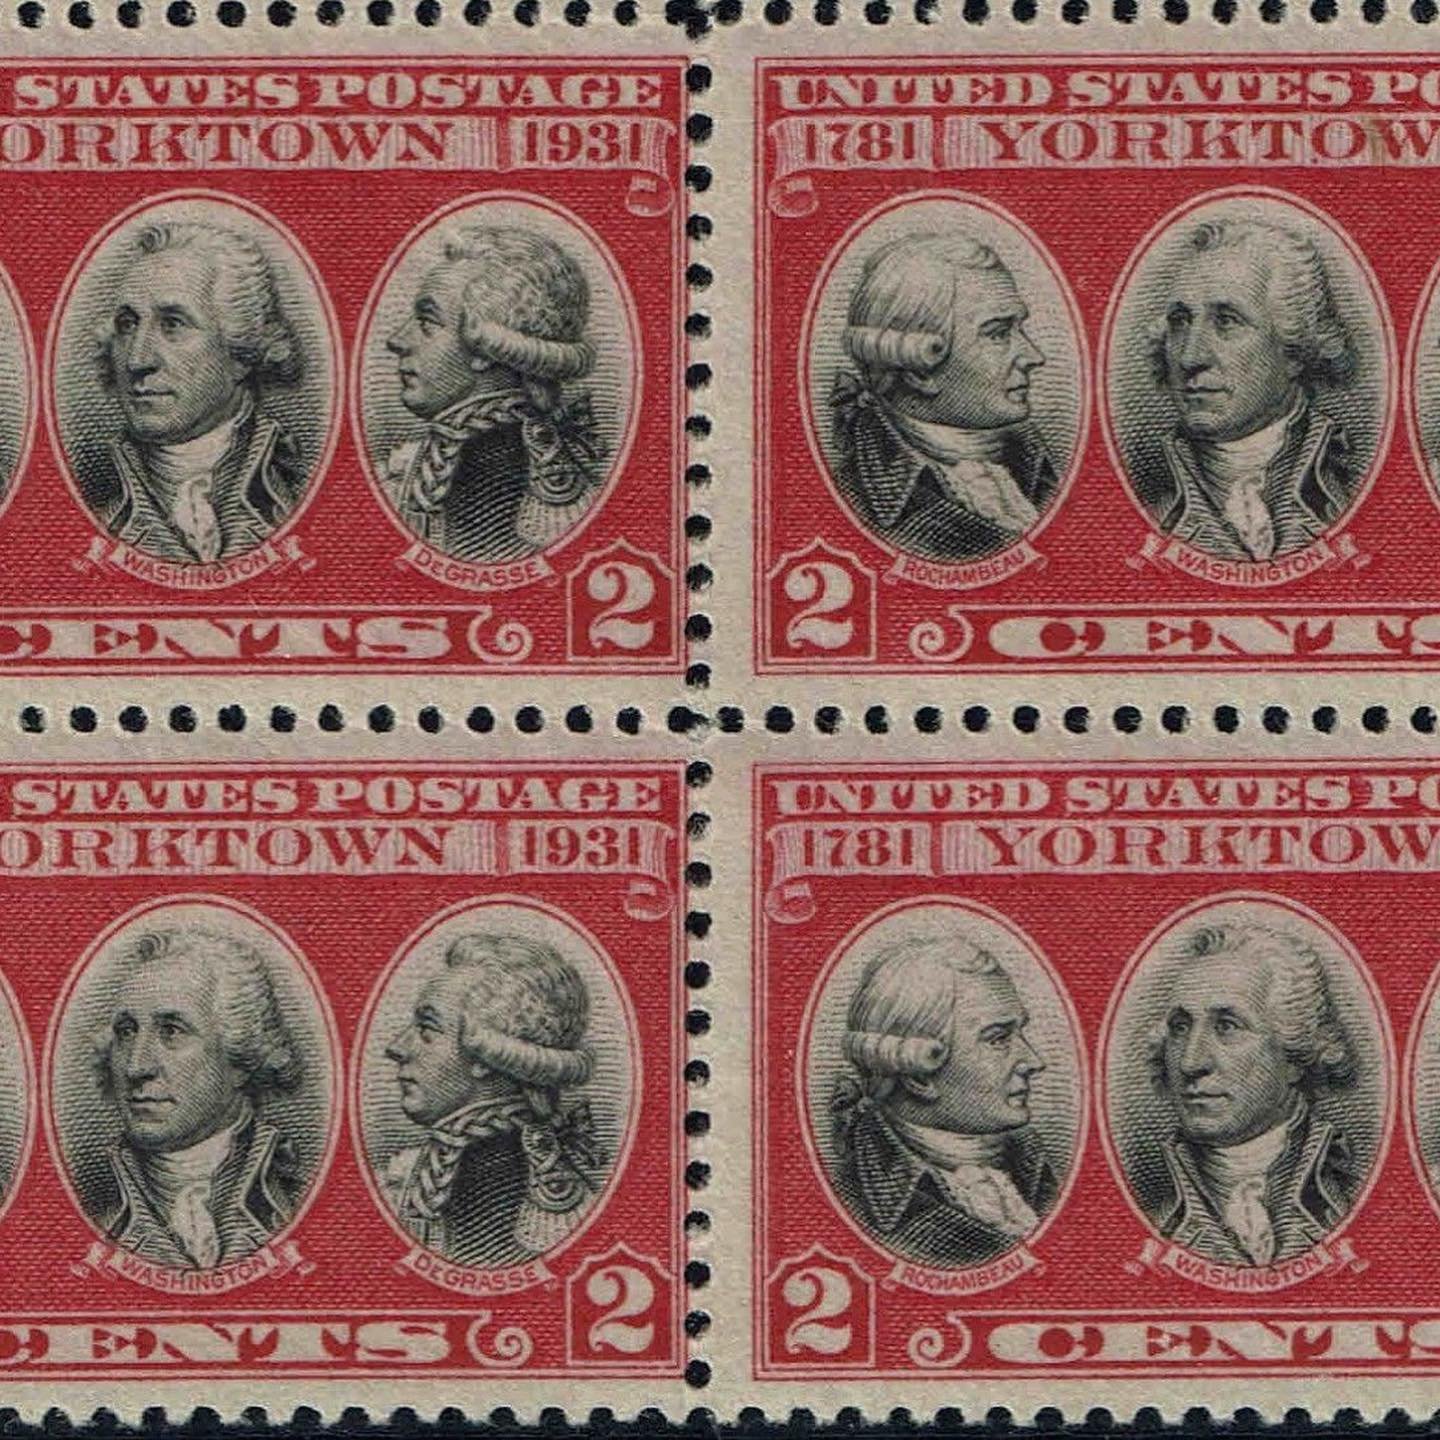 Yorktown-Stamp-1781-1931.jpg